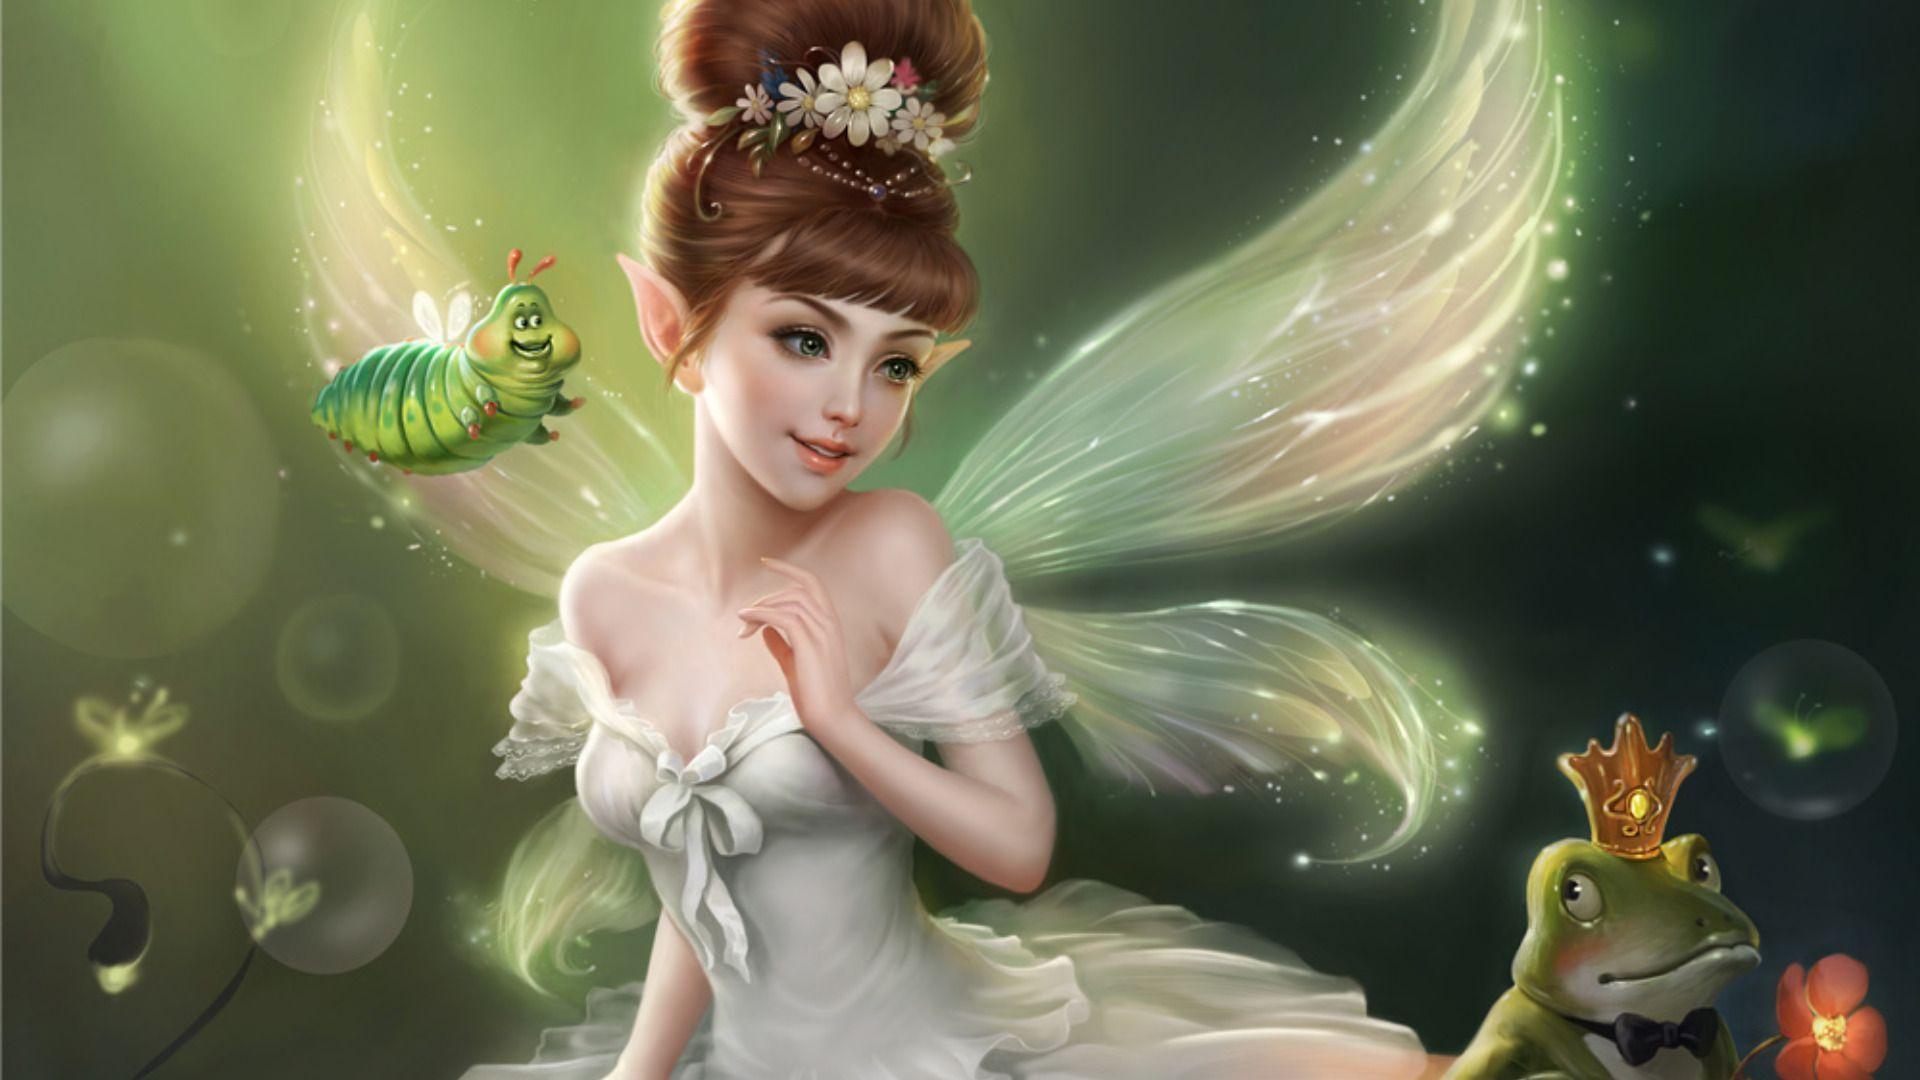 Wallpaper For > Cute Fairy Wallpaper Desktop